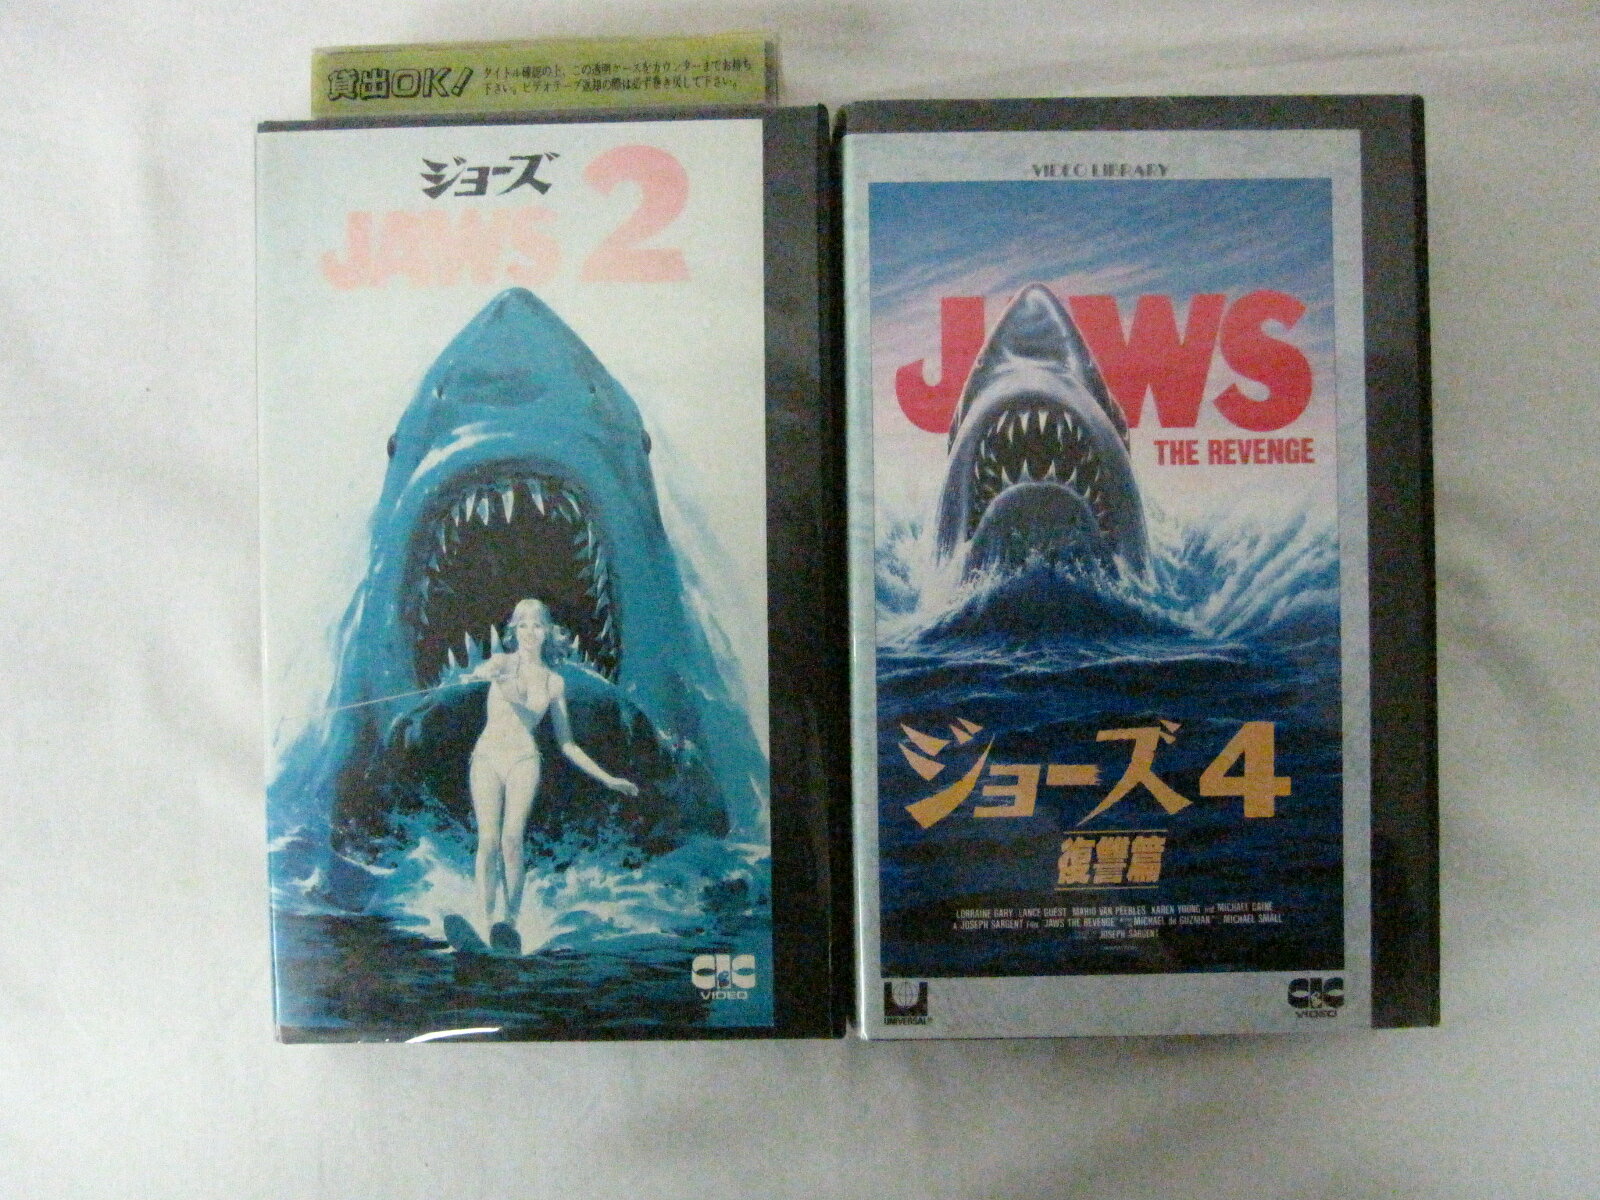 HVS01392【送料無料】【中古・VHSビデオセット】「ジョーズ 2 , 4(復讐編) 計2本」